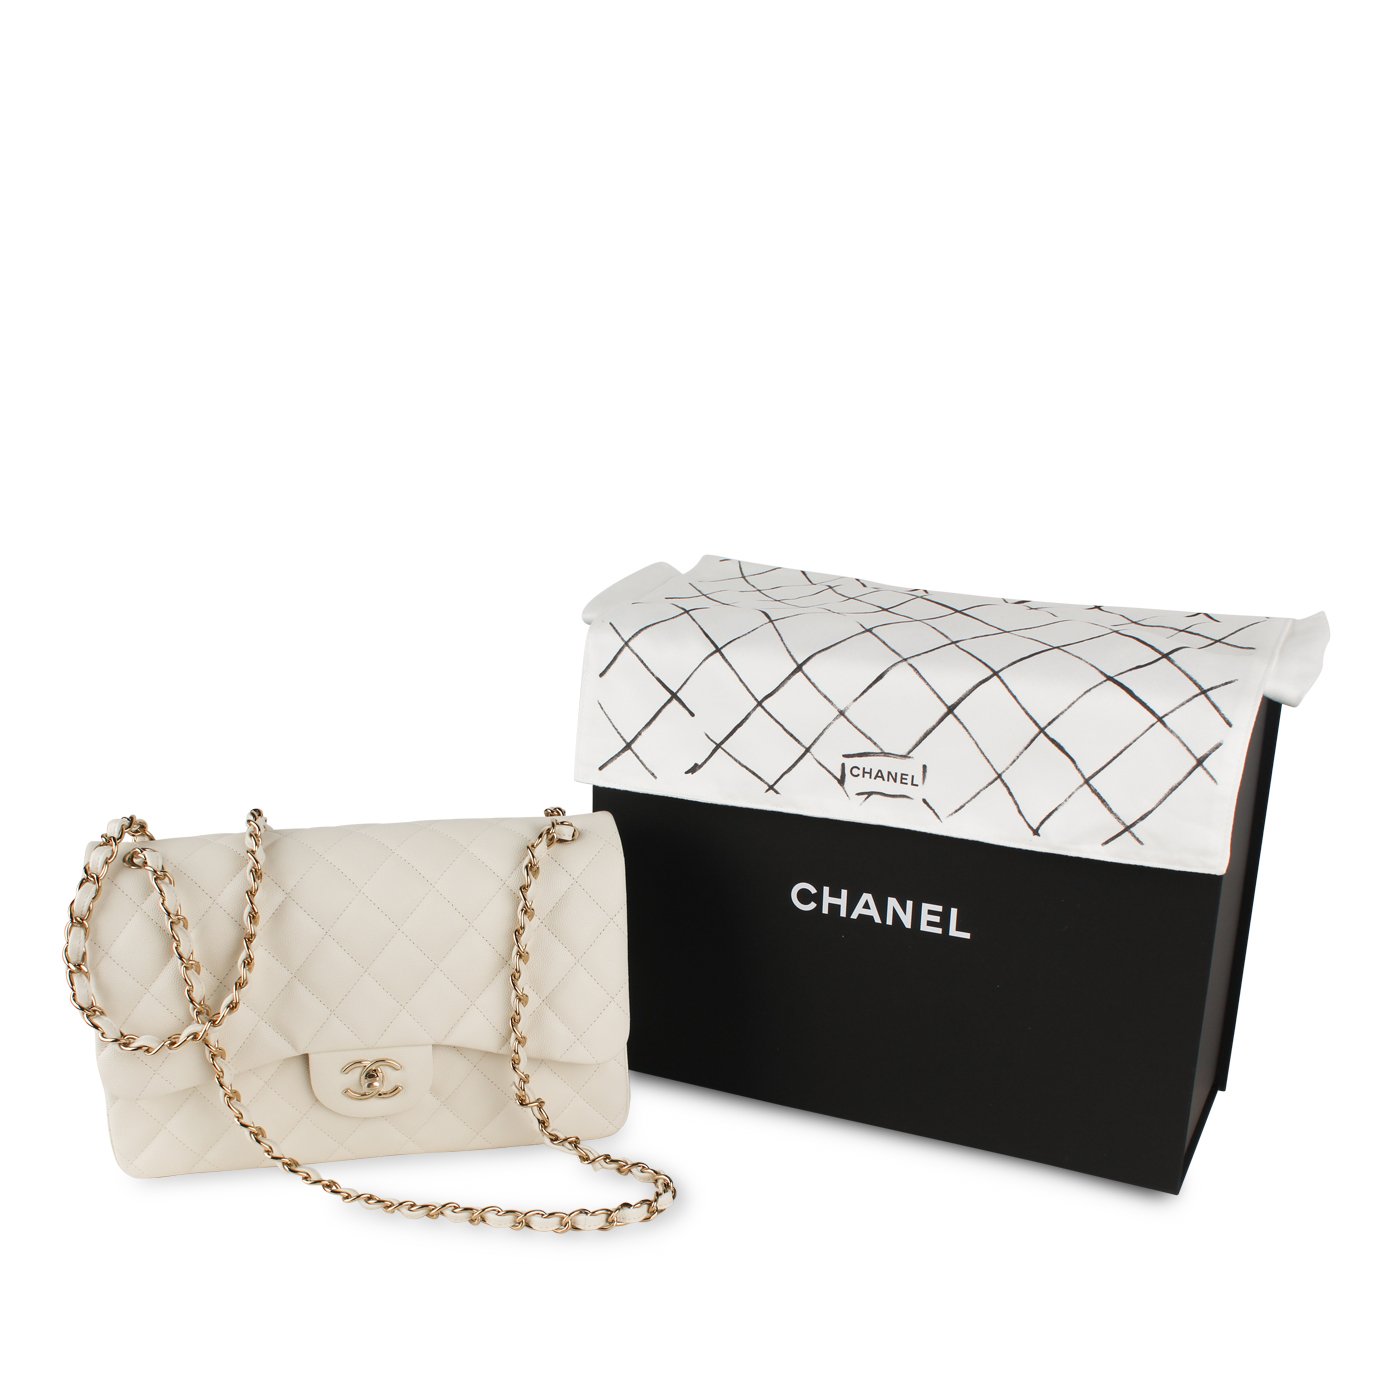 Chanel - Classic Flap Bag Jumbo - White Caviar Leather - Brand New